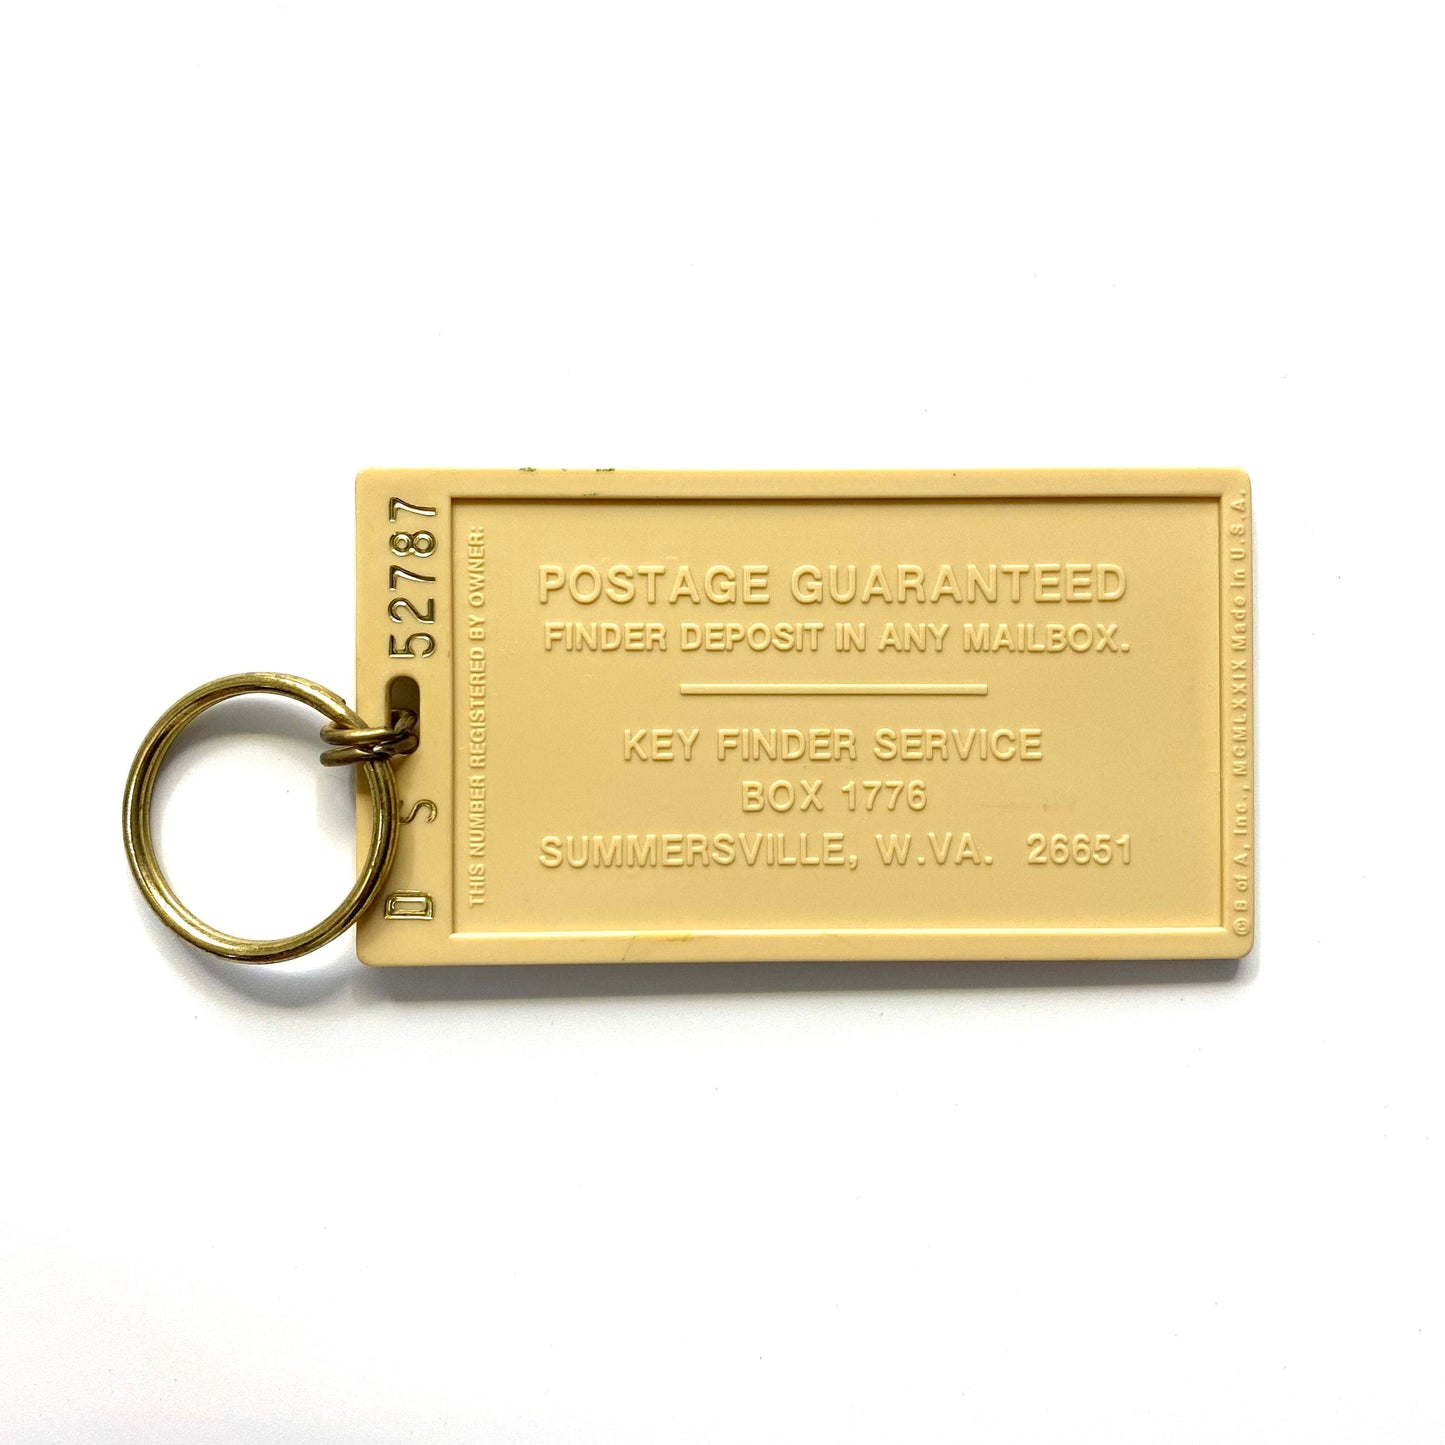 Vintage Key Finder Service "A hug would make my day." Keychain Key Ring Plastic Rectangle Beige